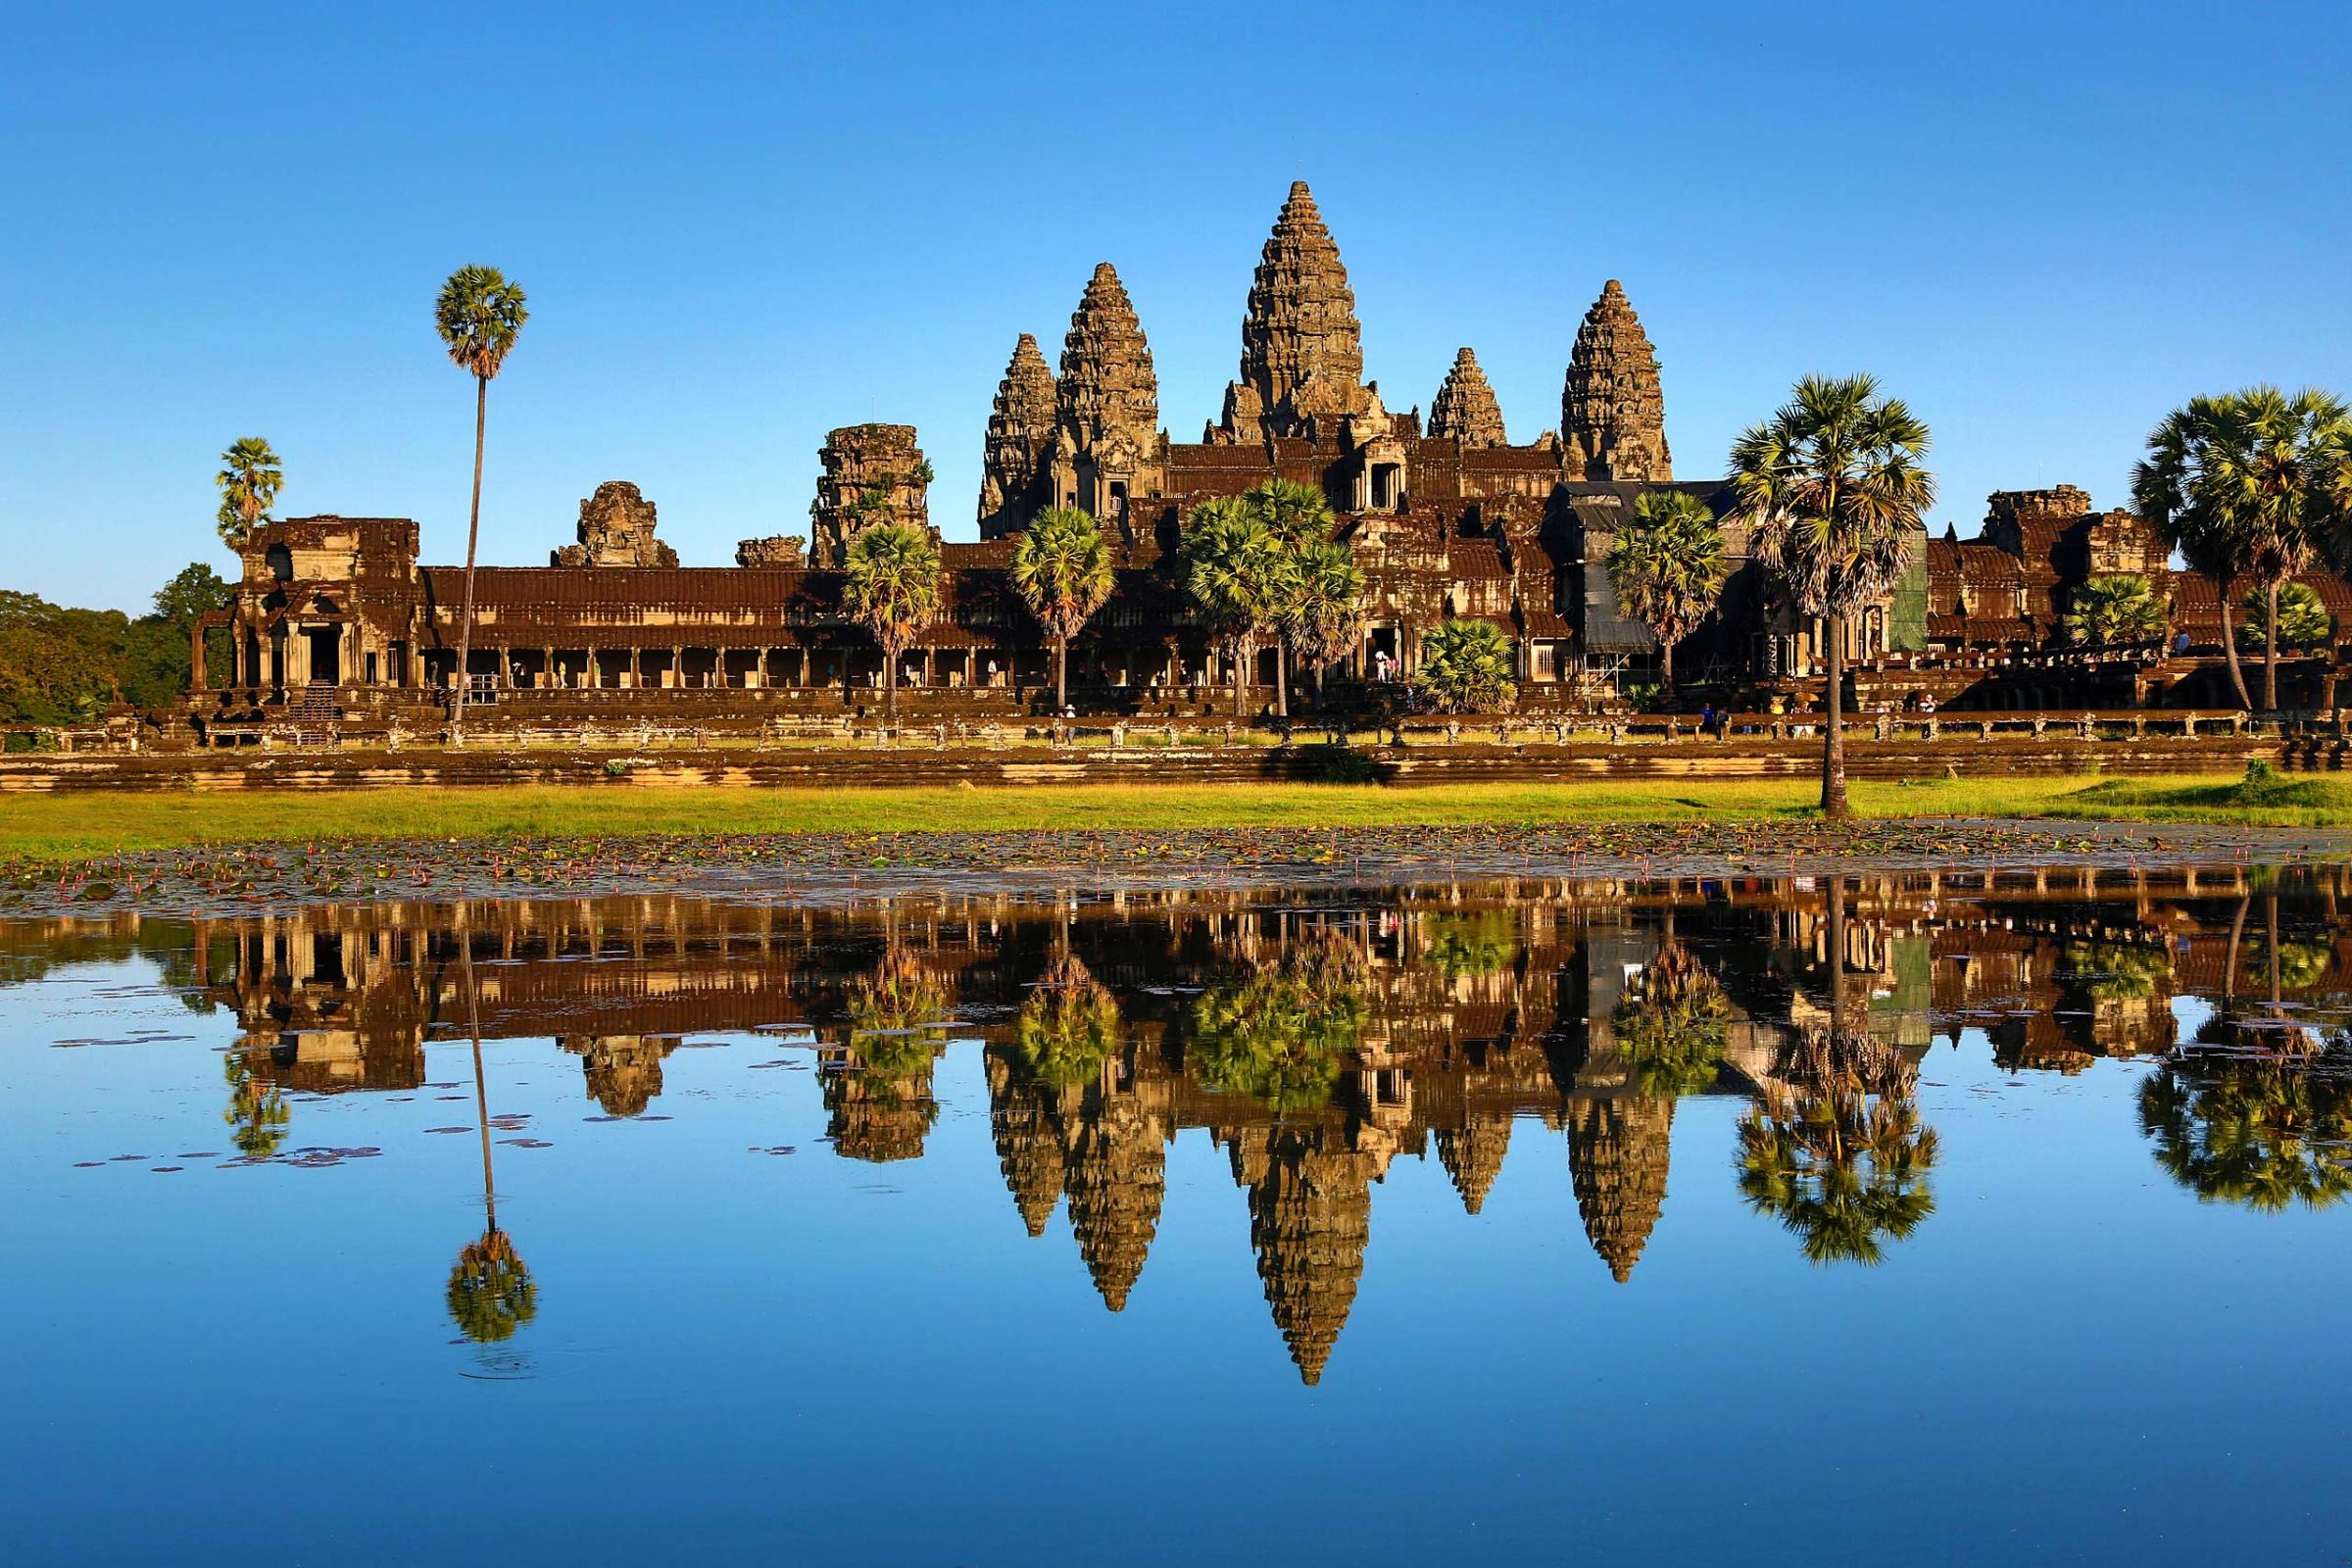 Angkor Wat - Siem Reap, Cambodia